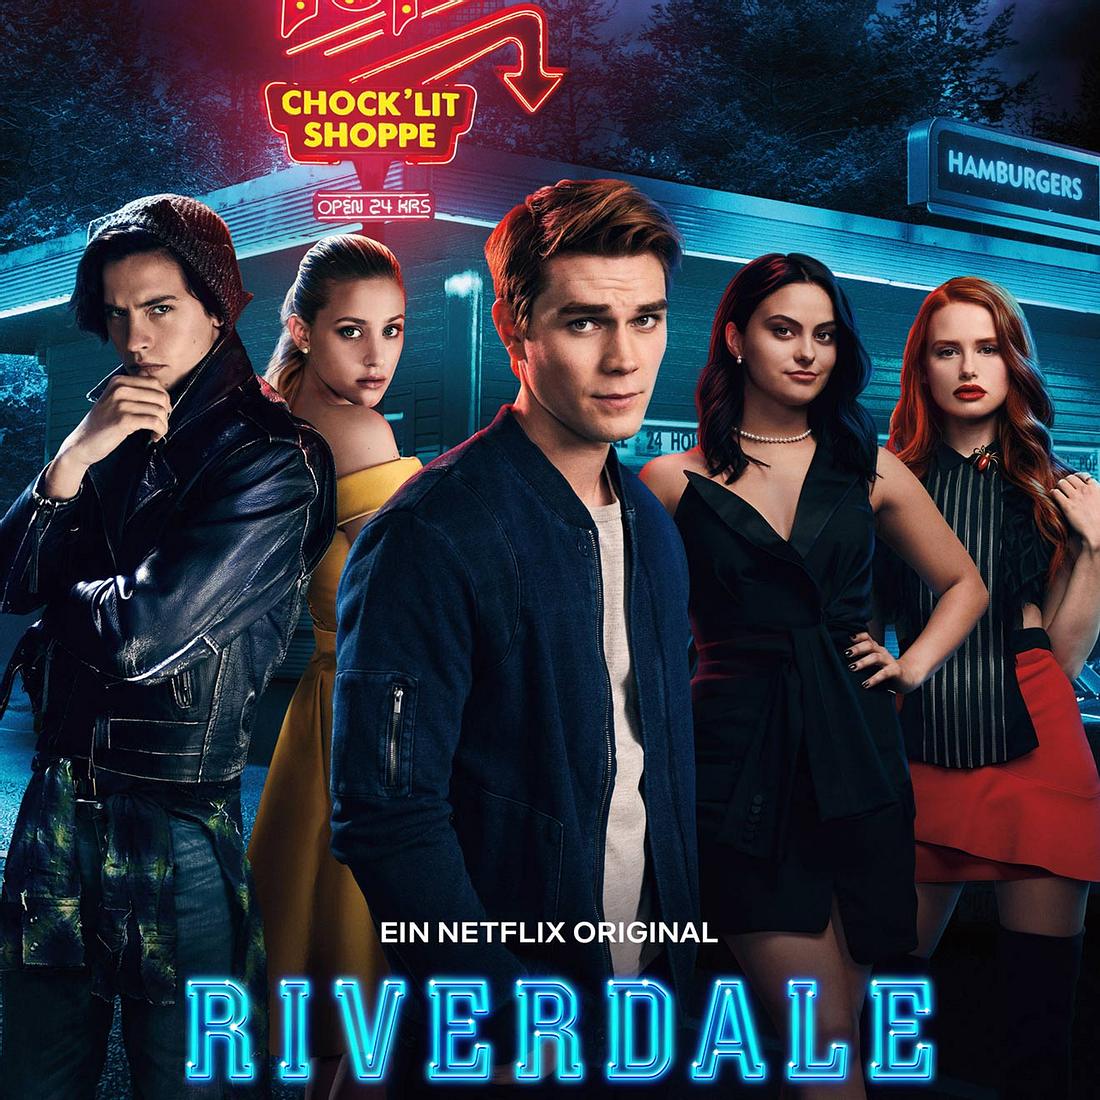 „Riverdale“: Alle Infos zu Staffel 5